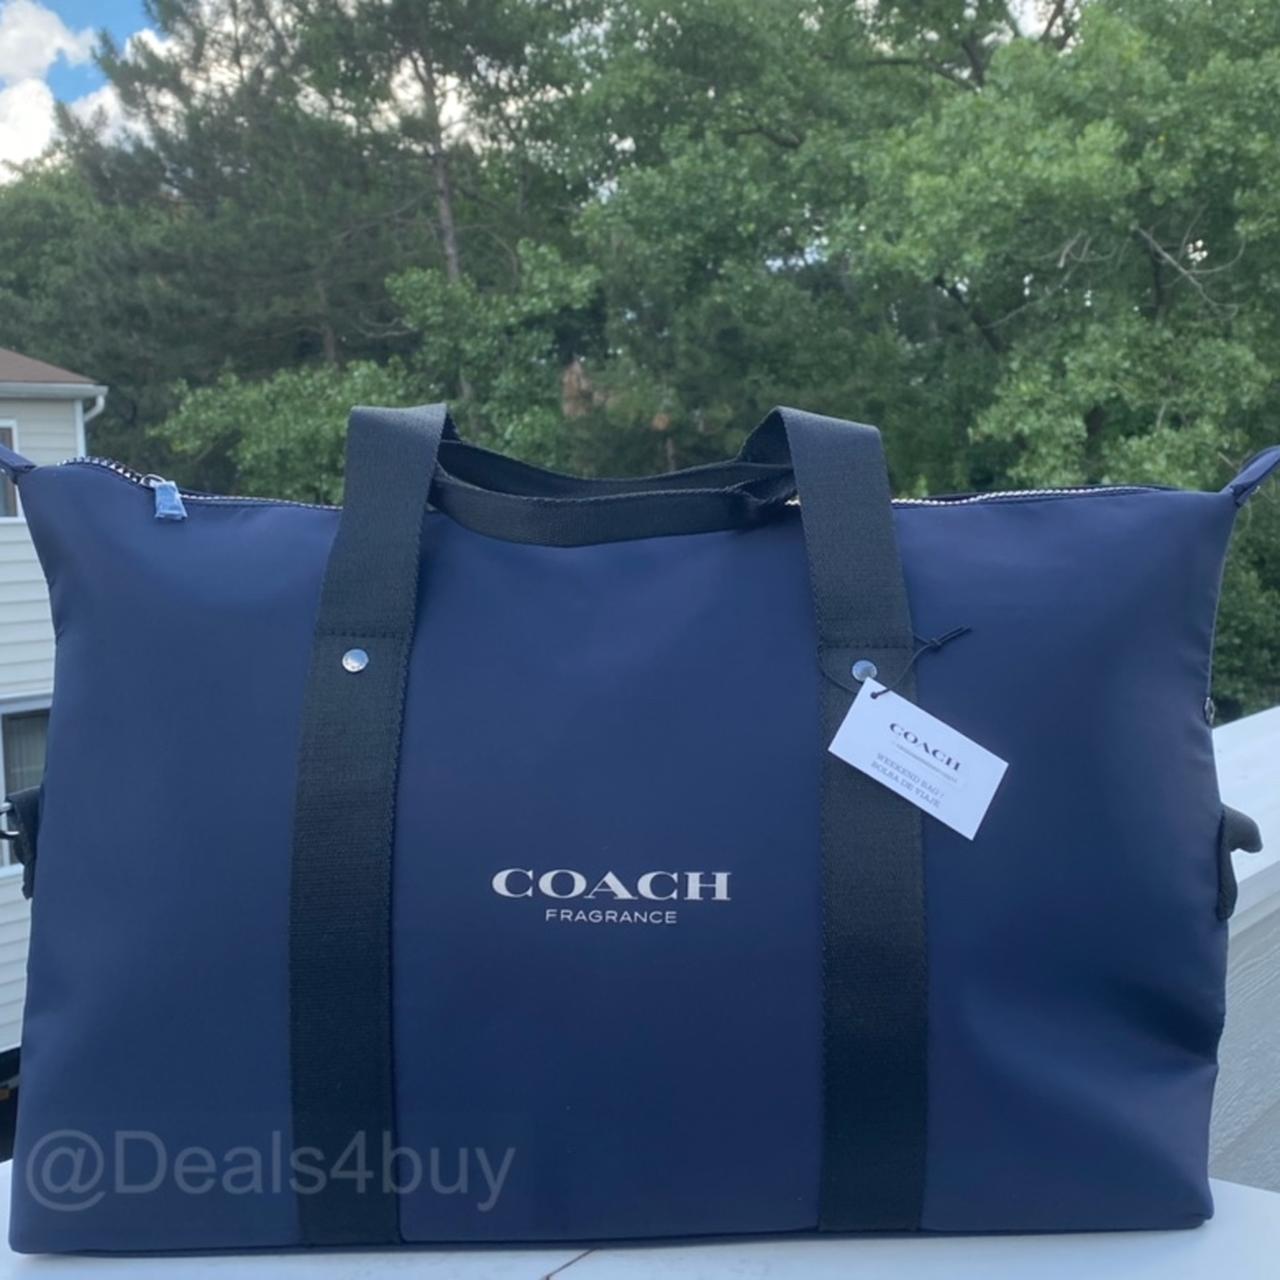 Coach Bright Blue Legacy Duffle Bag With Tassels style - Etsy Ireland